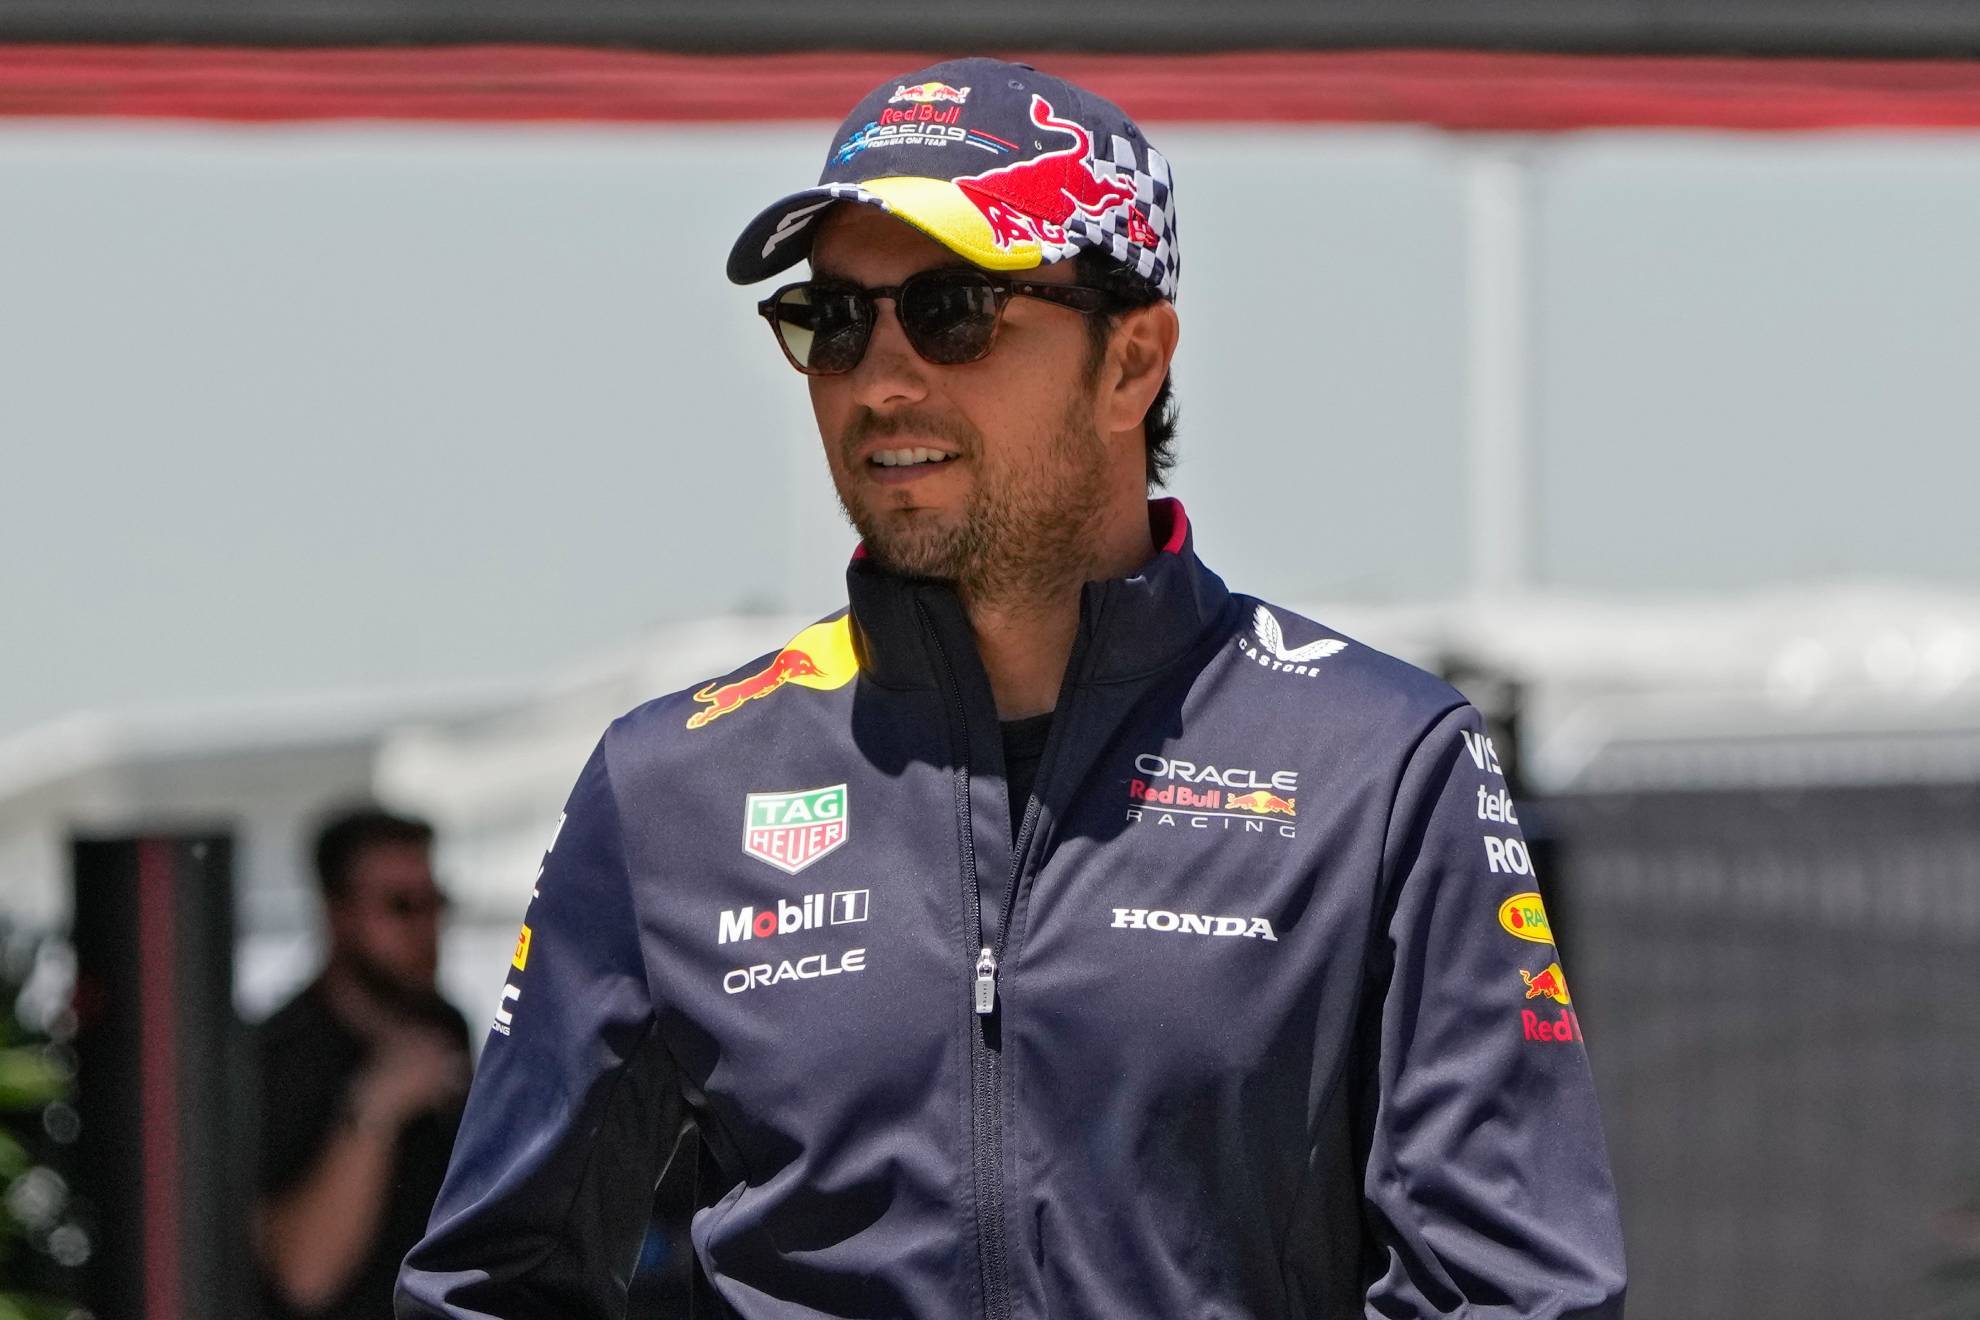 Sergio Prez GP China F1 Red Bull Racing